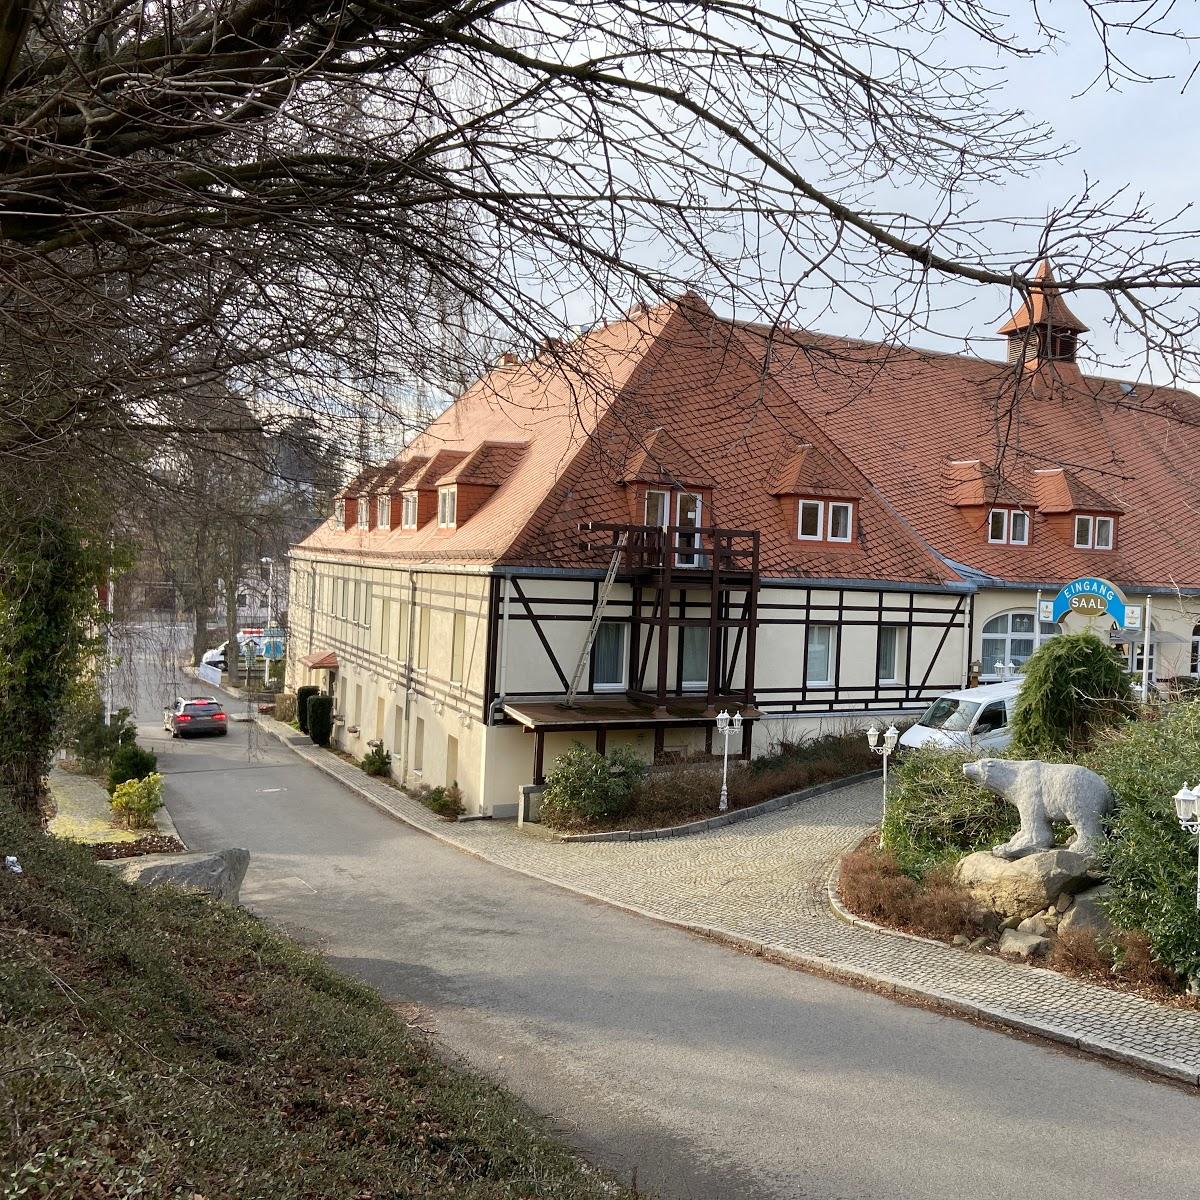 Restaurant "Hotel Gasthof zum Erbgericht" in Klingenberg